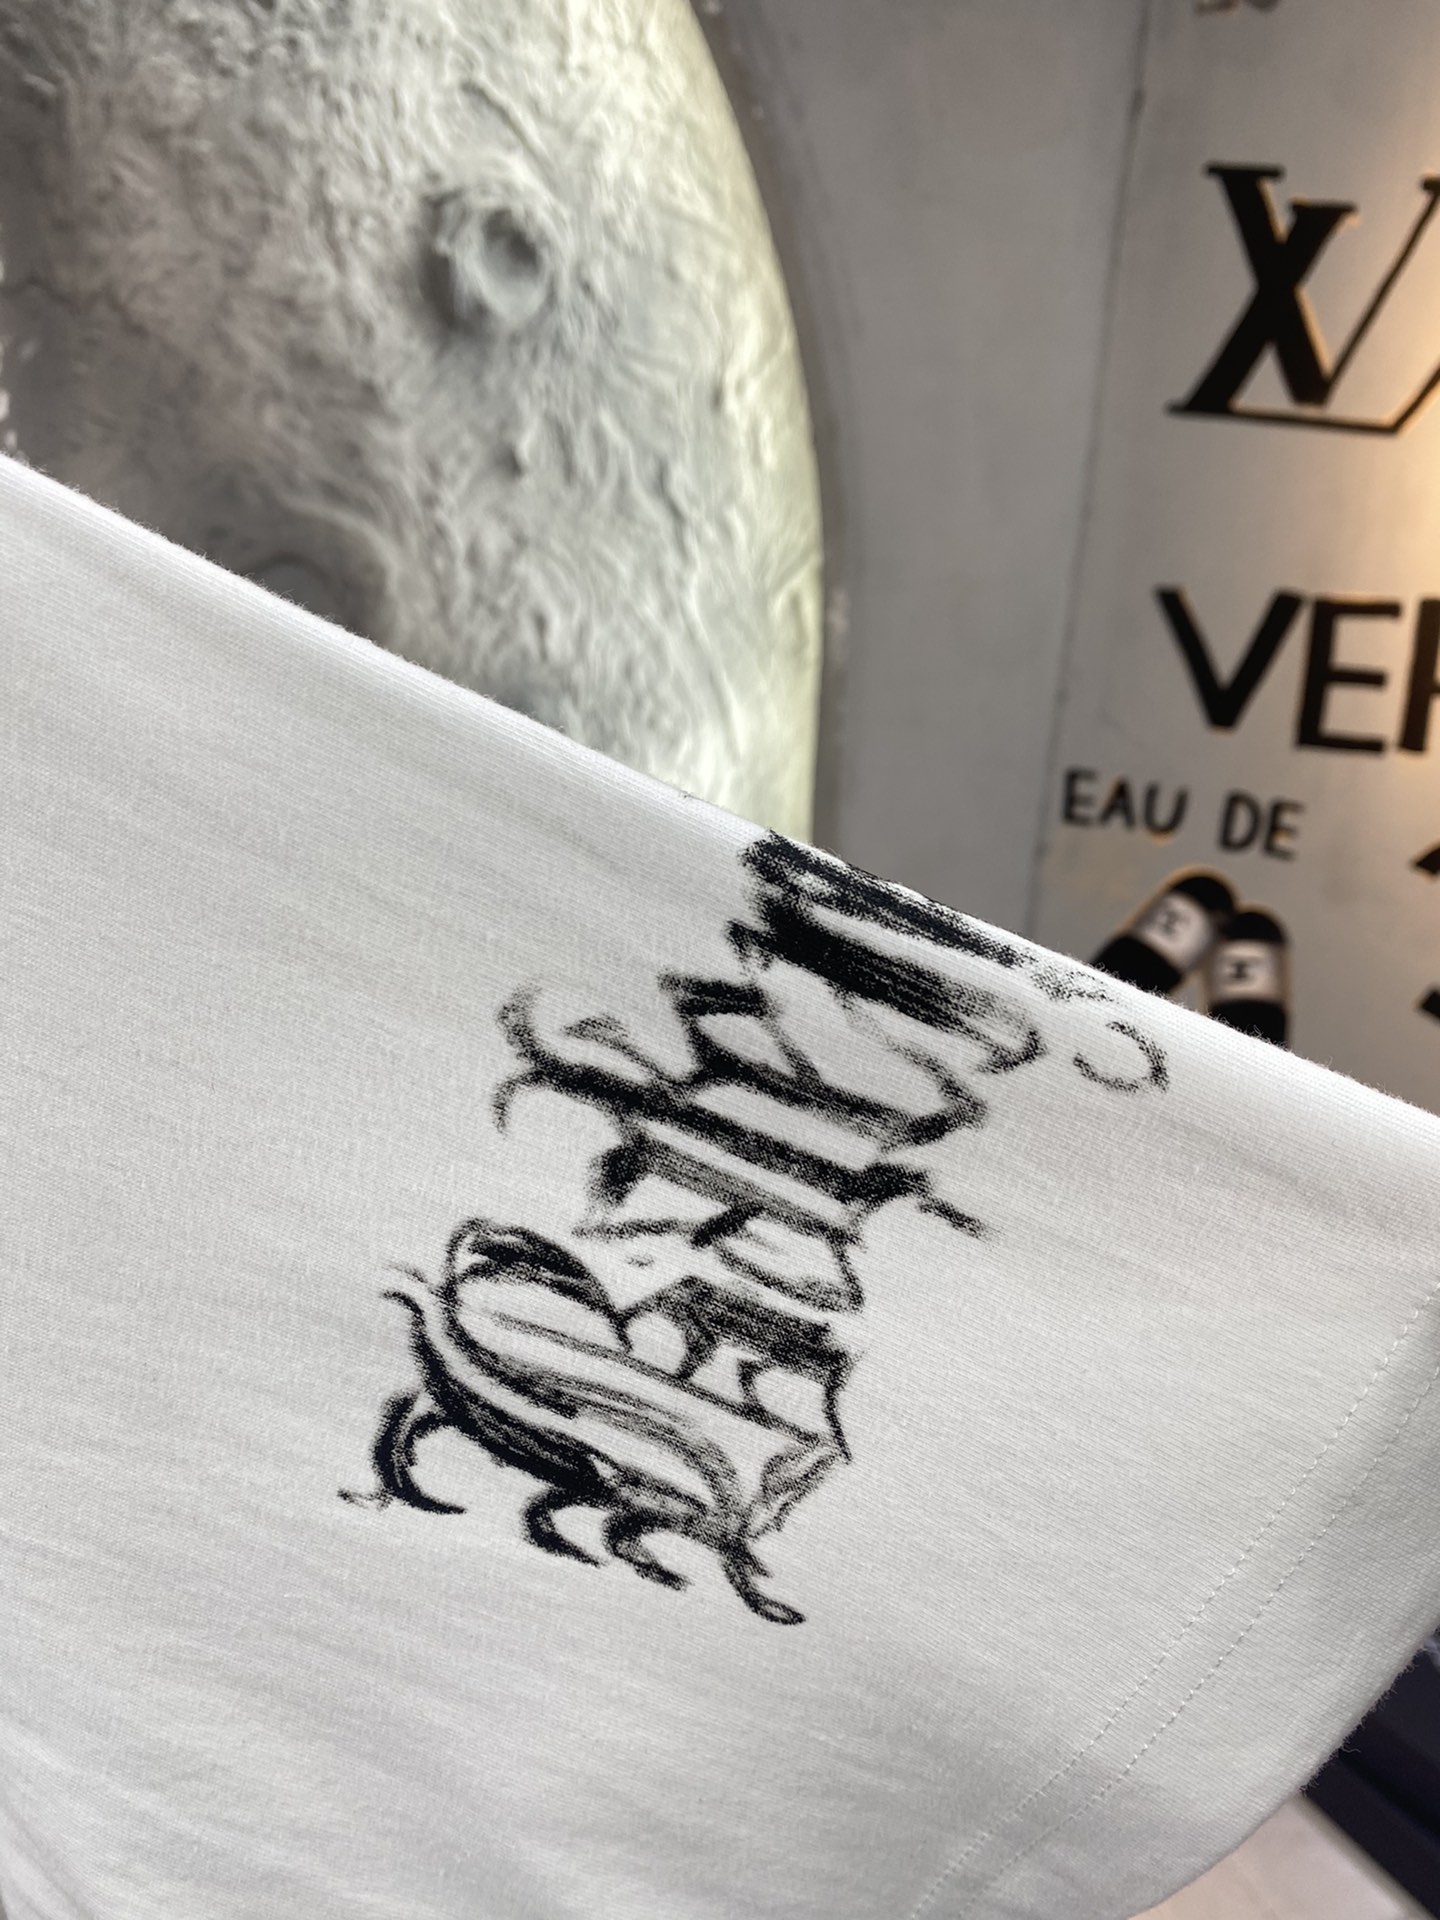 Balenciaga巴黎世家龙年限定标语印花短袖TeeZP打板历时半个多月时间根据原版开发不管是面料印花